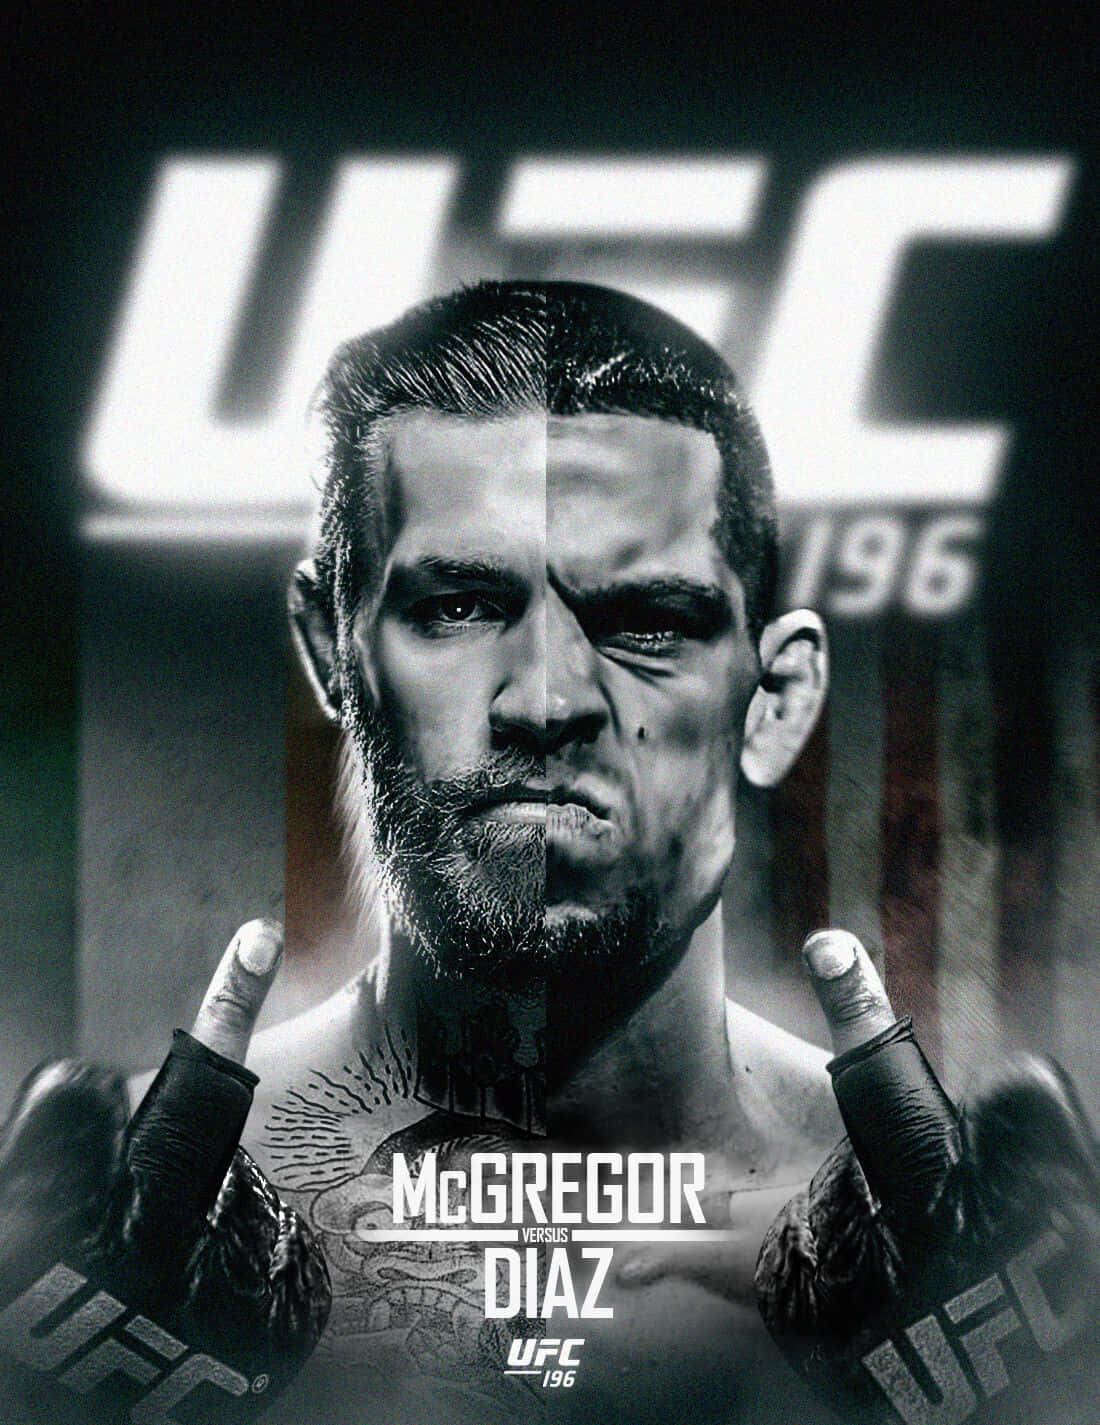 Nate Diaz And Conor McGregor UFC 196 Poster Wallpaper